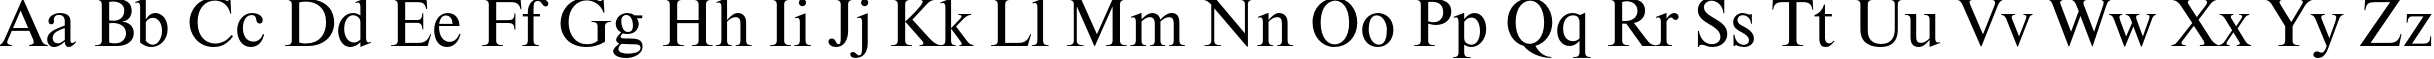 Пример написания английского алфавита шрифтом NewtonC